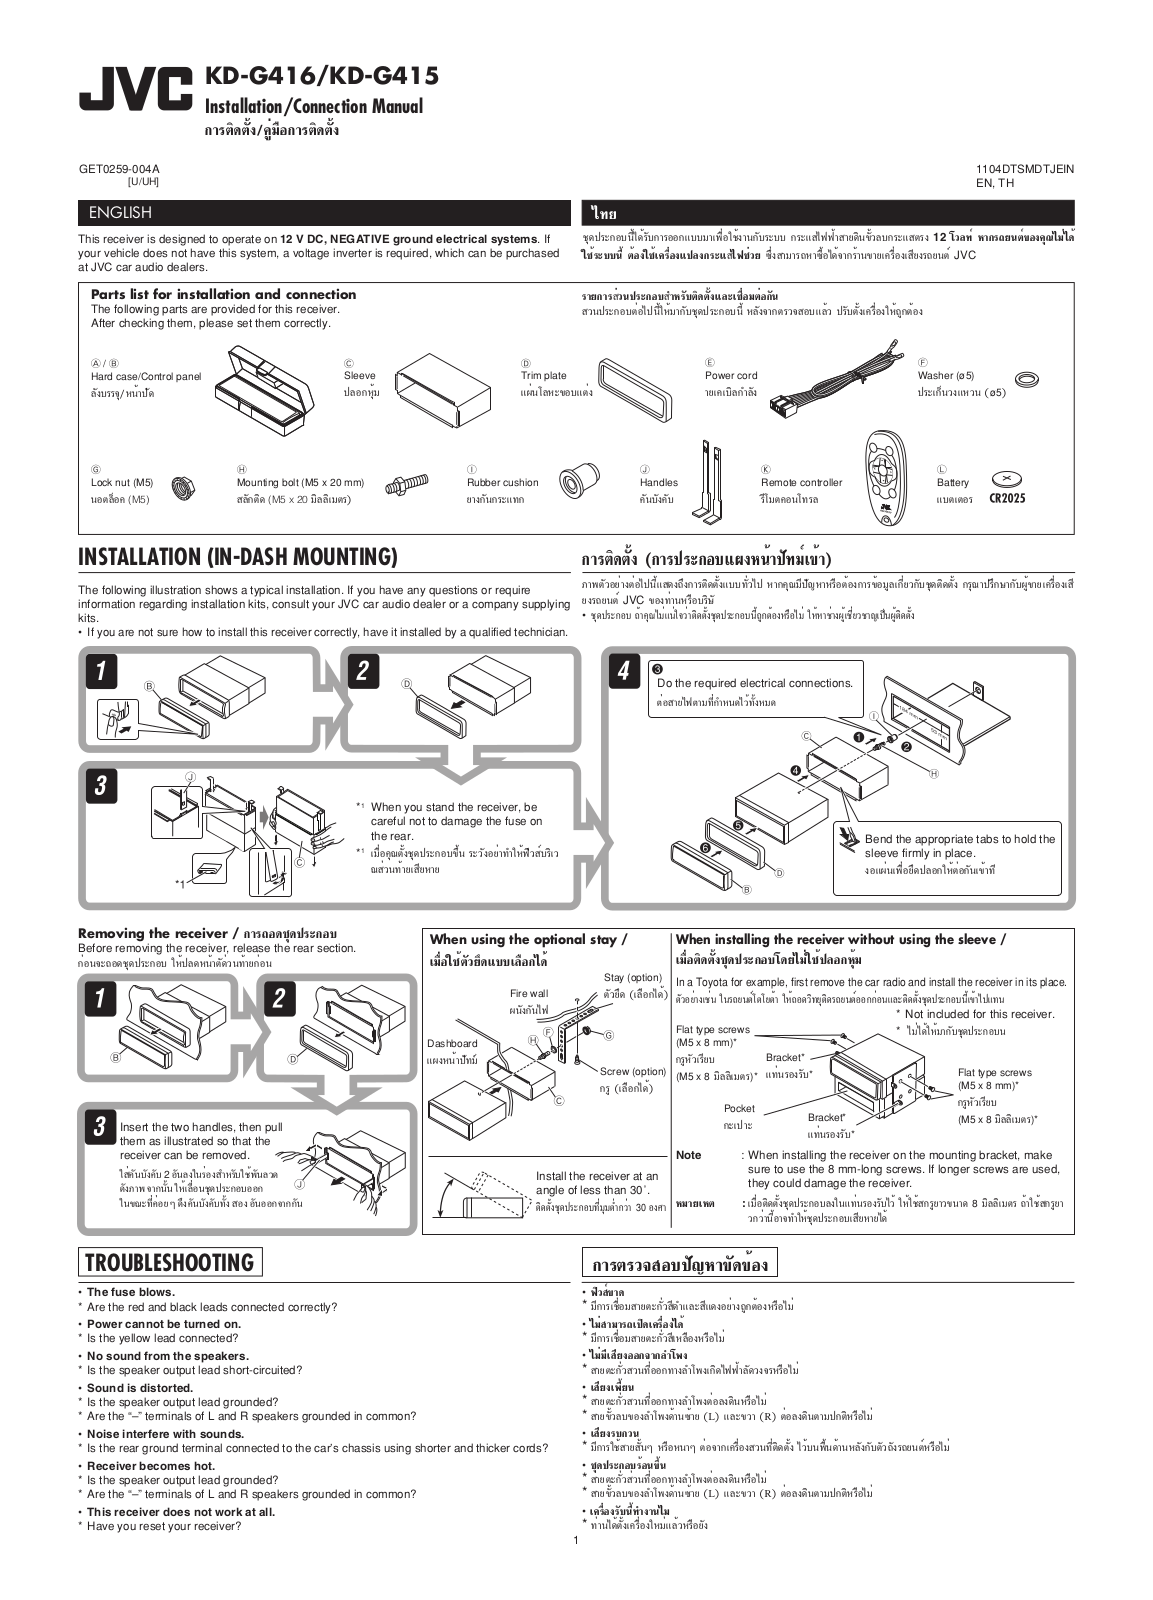 JVC KD-G416, KD-G415 Installation Manual